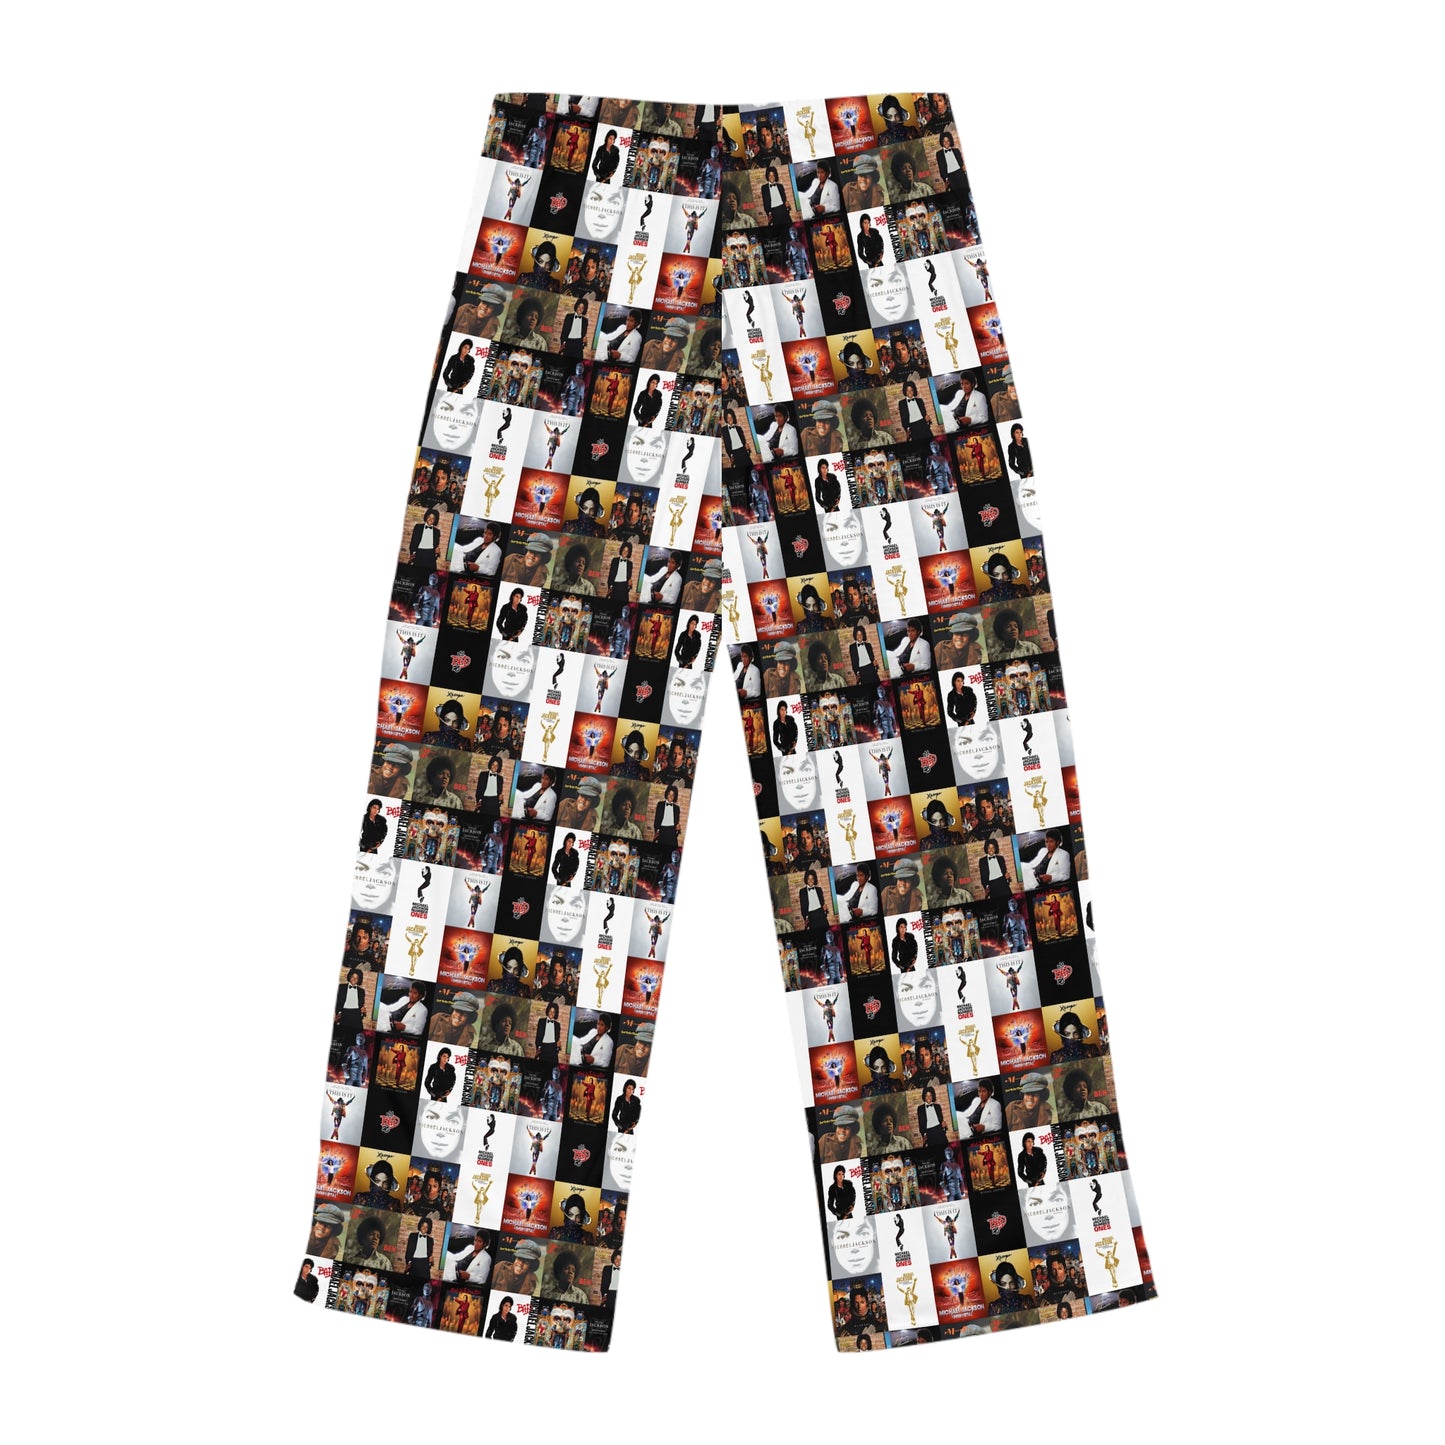 Michael Jackson Album Cover Collage Women's Pajama Pants